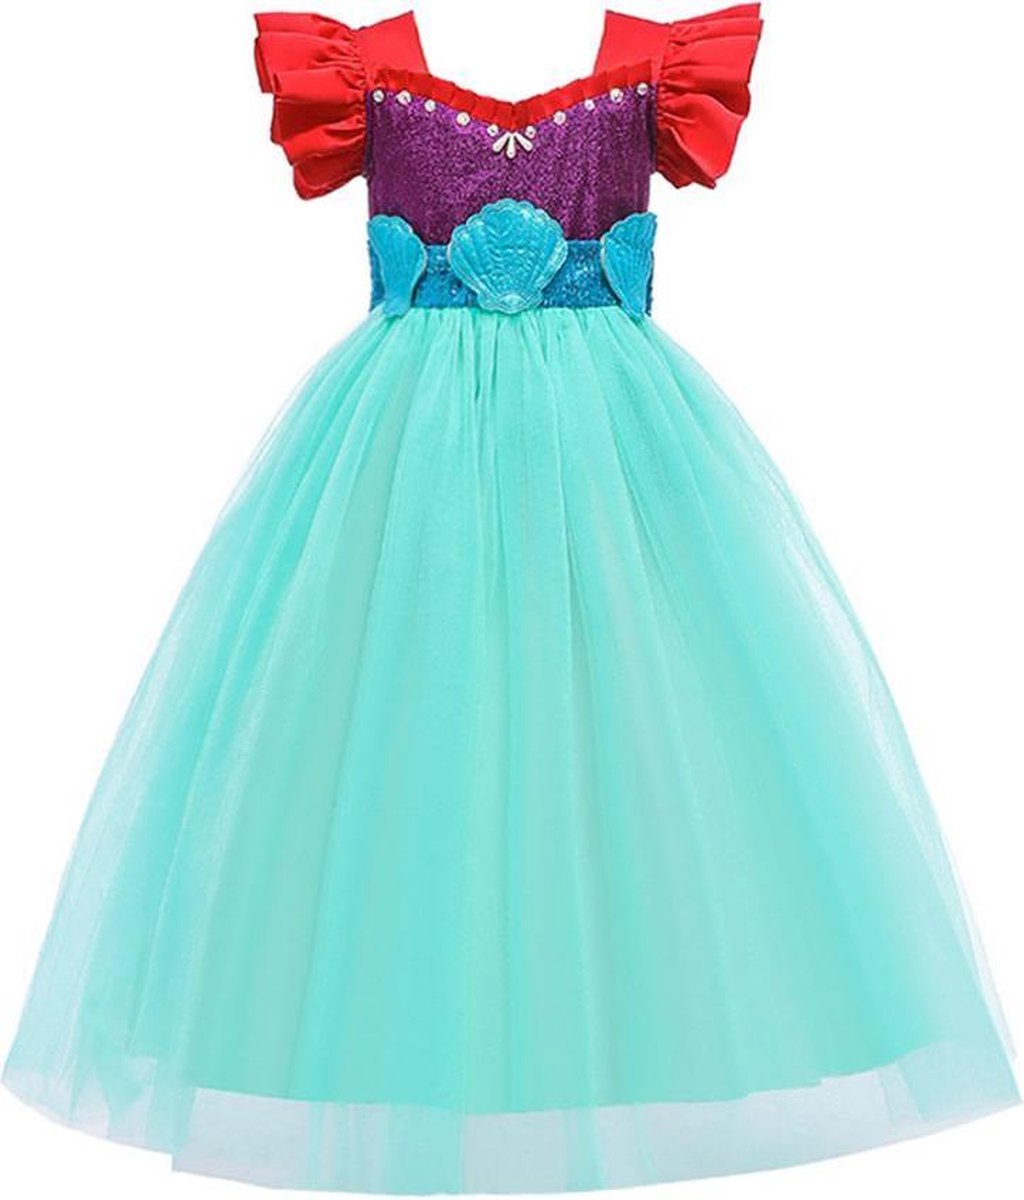 Prinses - Zeemeermin Ariel jurk - De Kleine Zeemeermin - Prinsessenjurk - Verkleedkleding - Zeegroen - 134/140 (8/9 jaar)